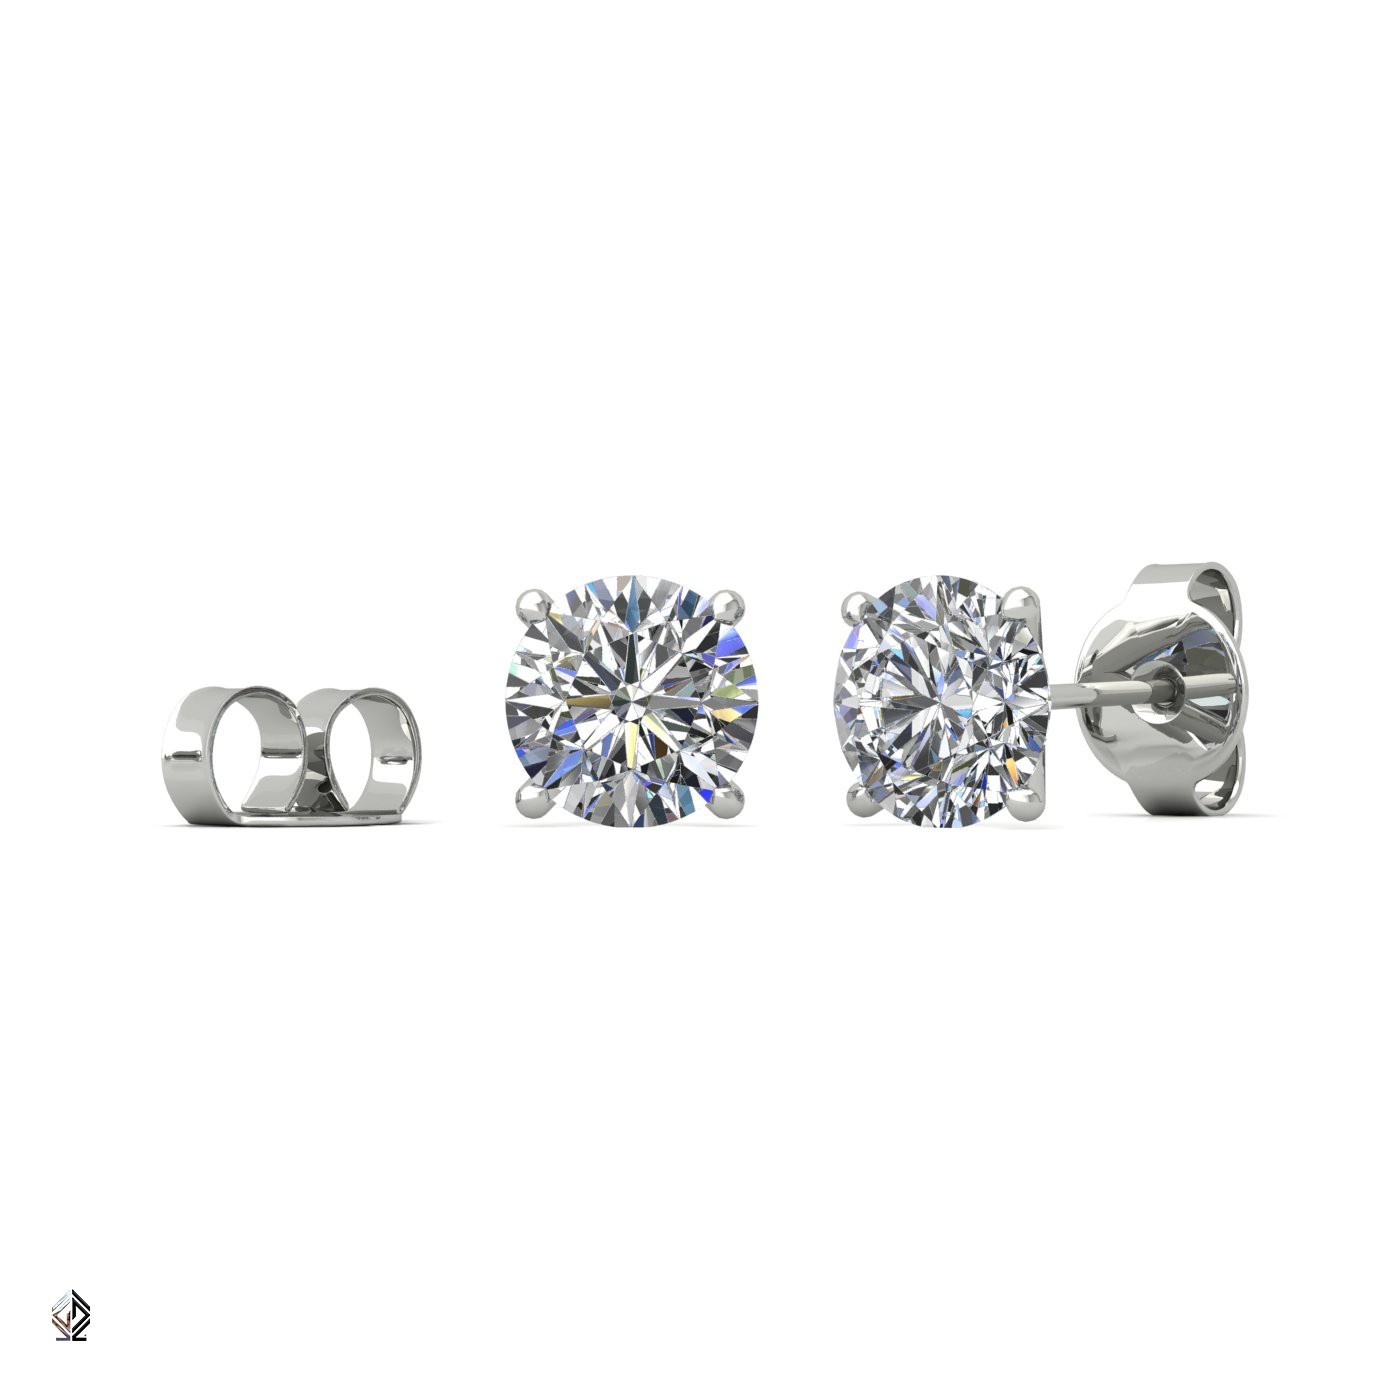 18k white gold 0,5 ct 4 prongs round cut classic diamond earring studs